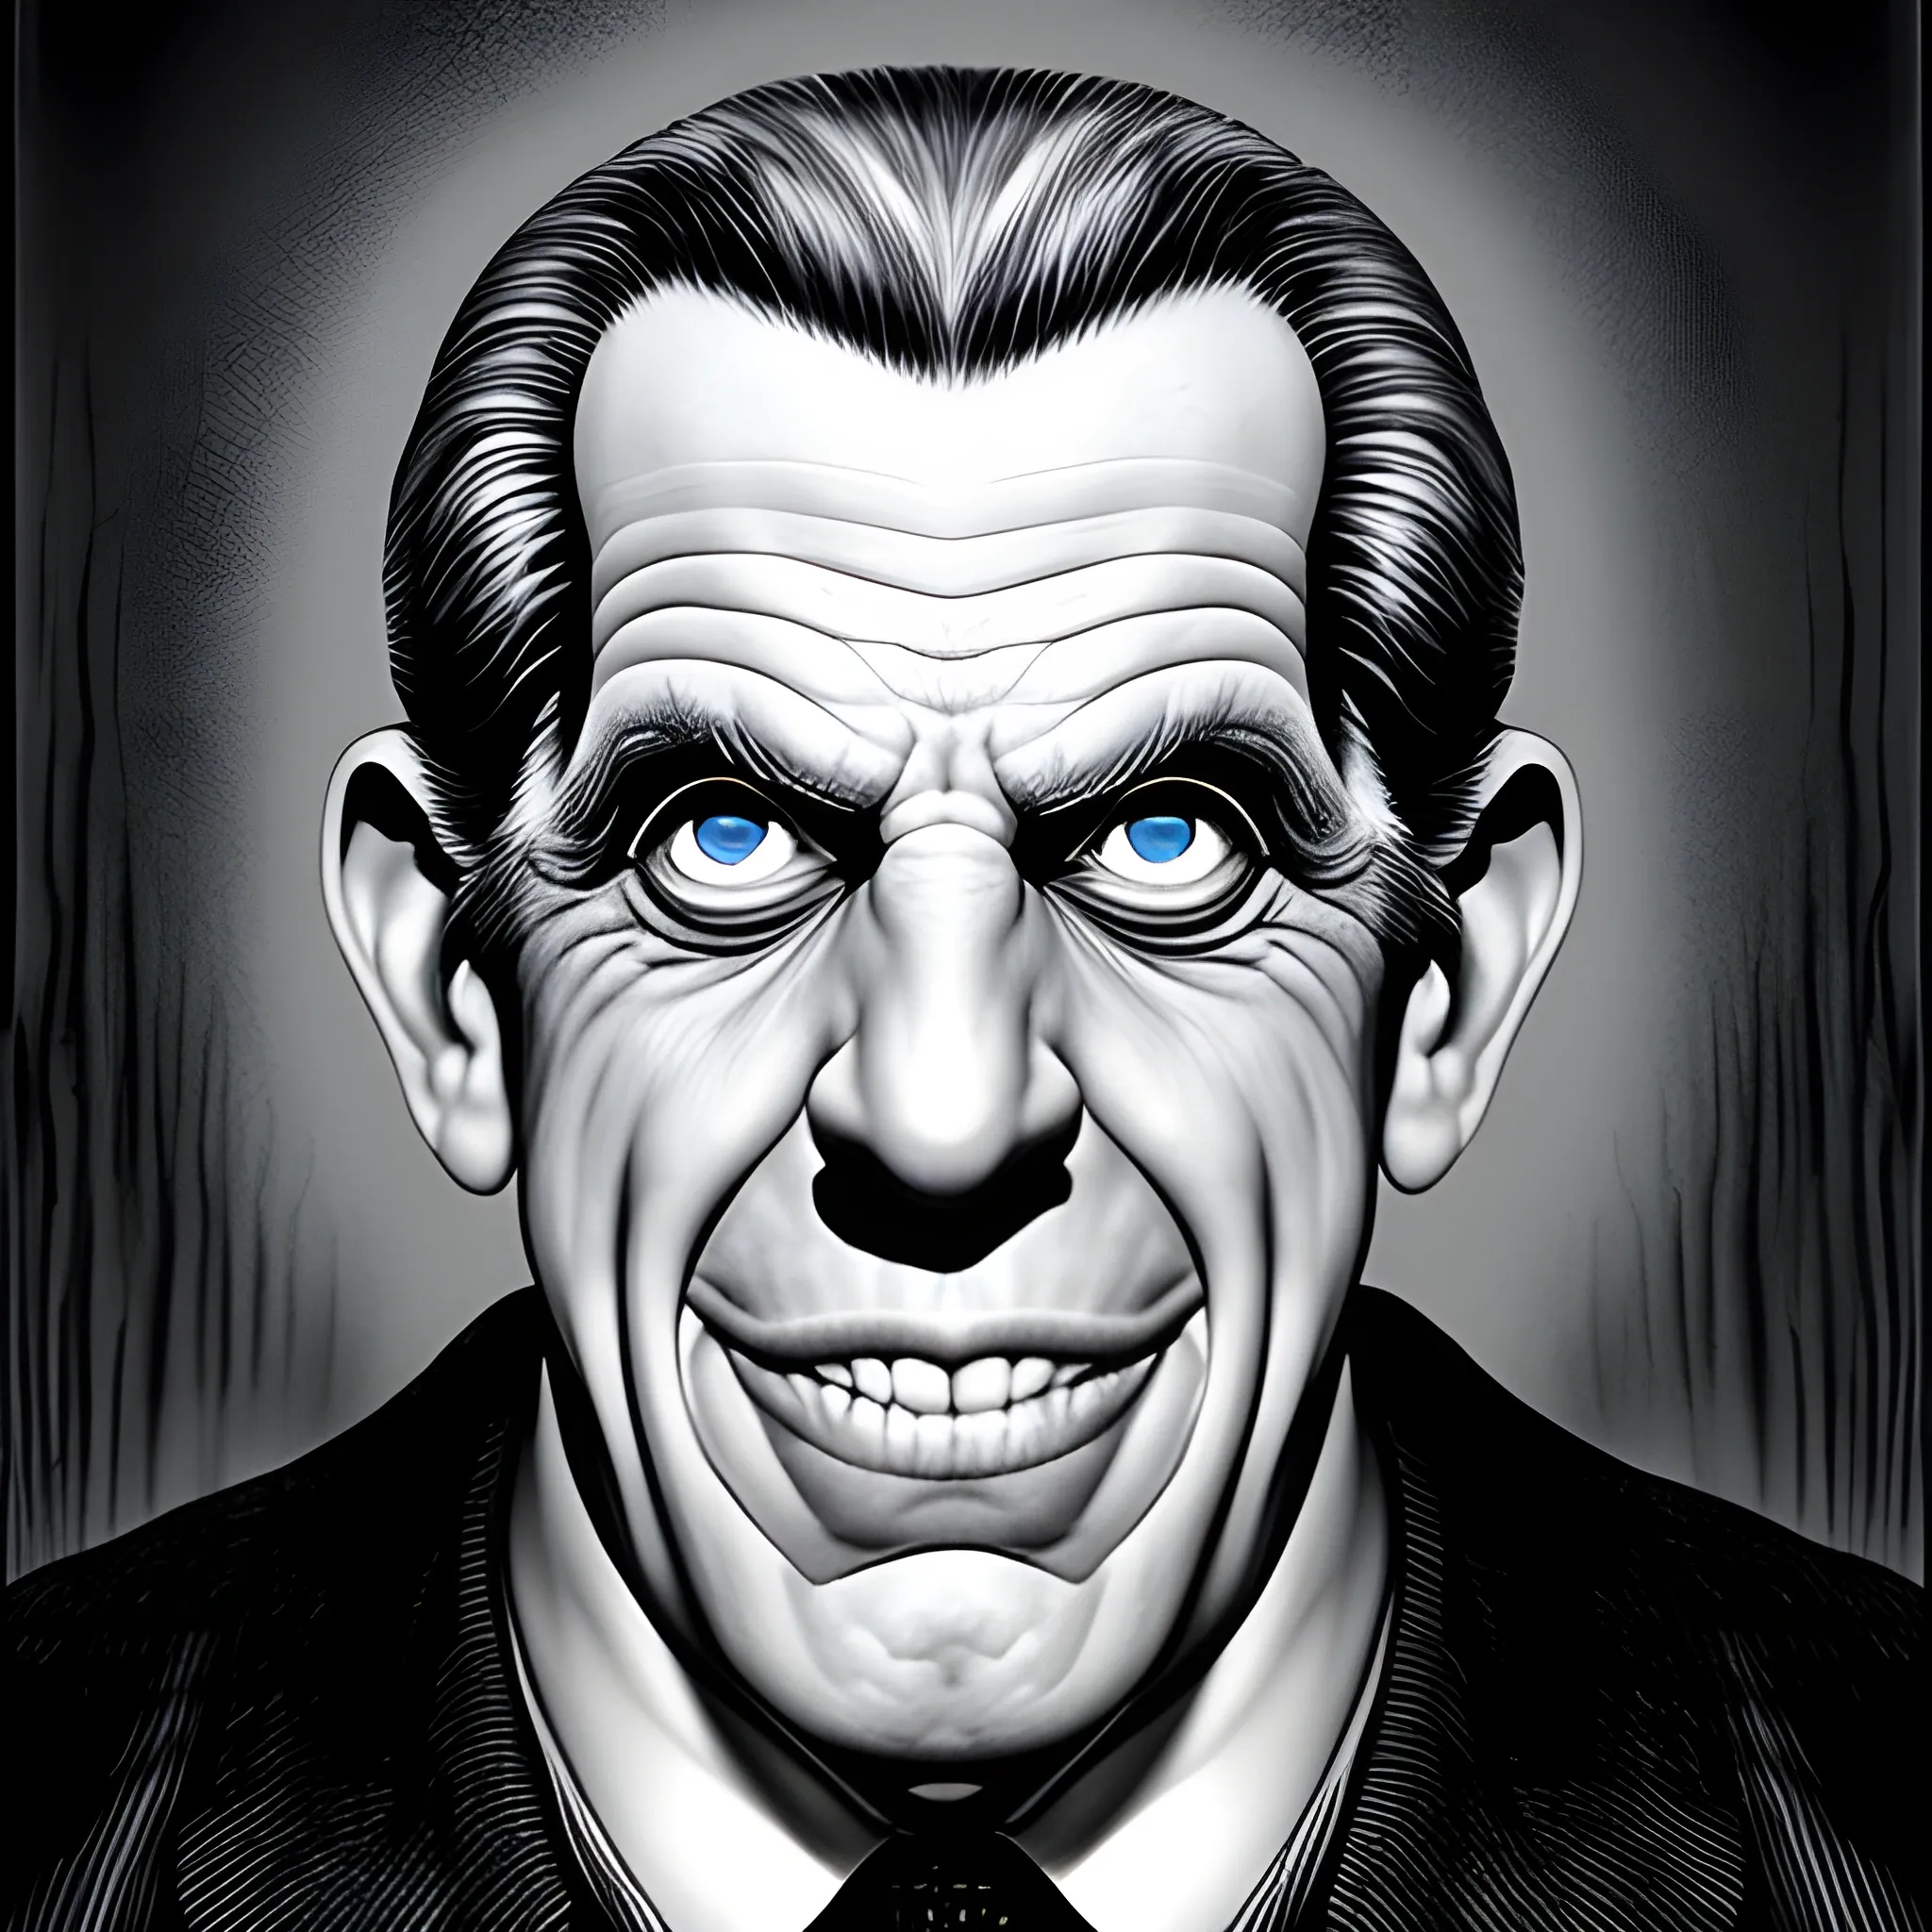 Fred gwynne as monster portrait 